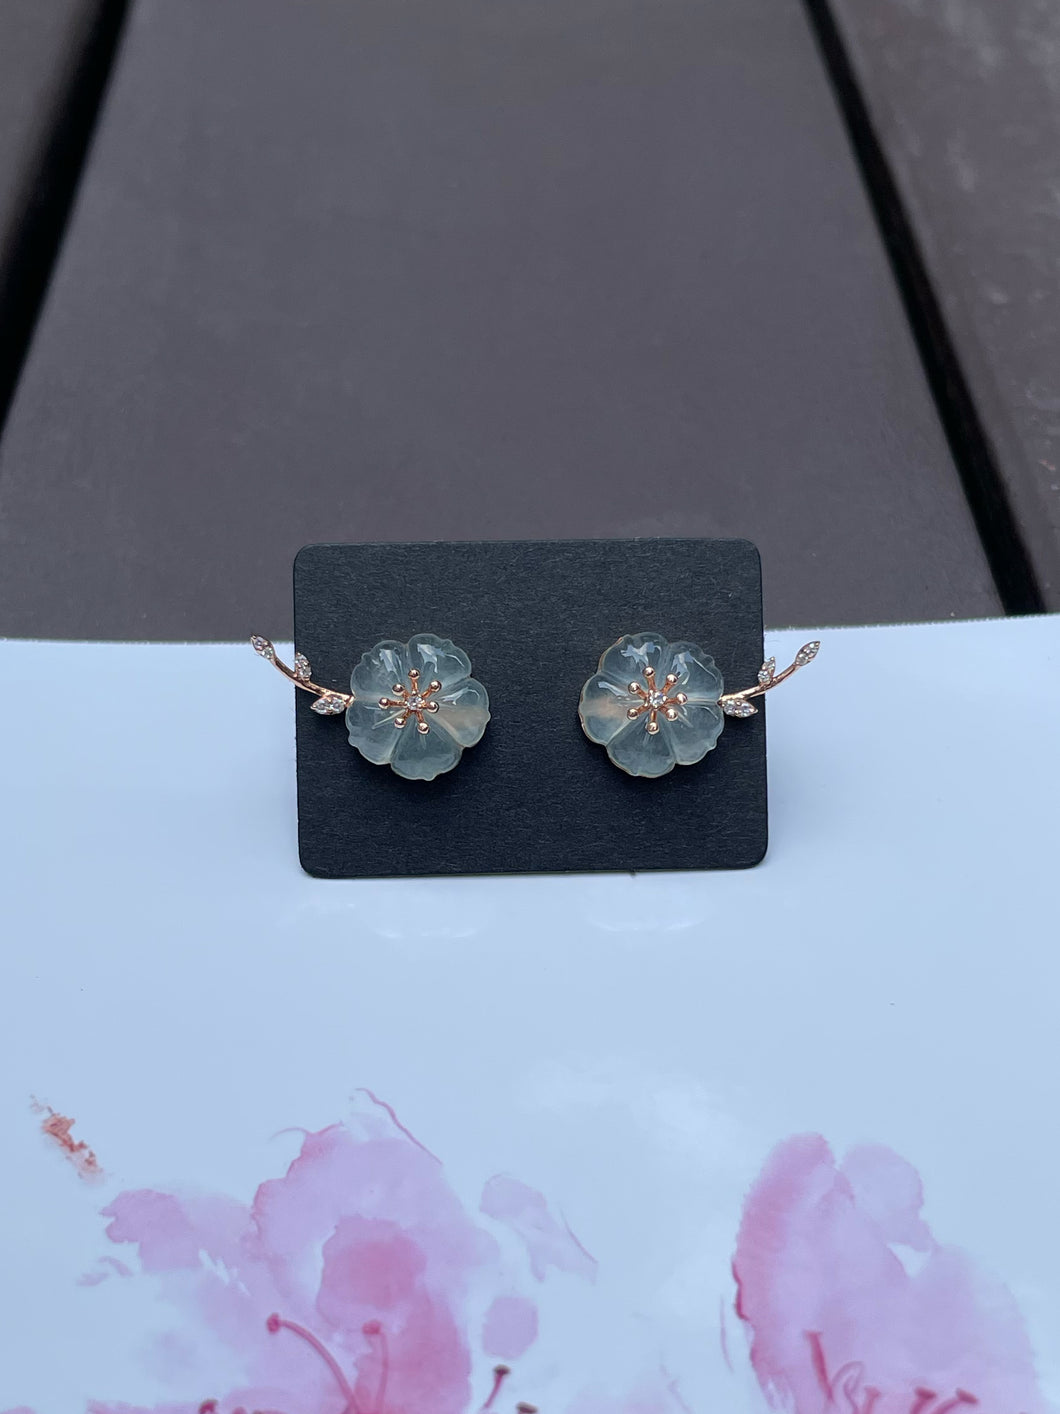 Icy Carved Jade Earrings - Plum Blossoms (NJE089)